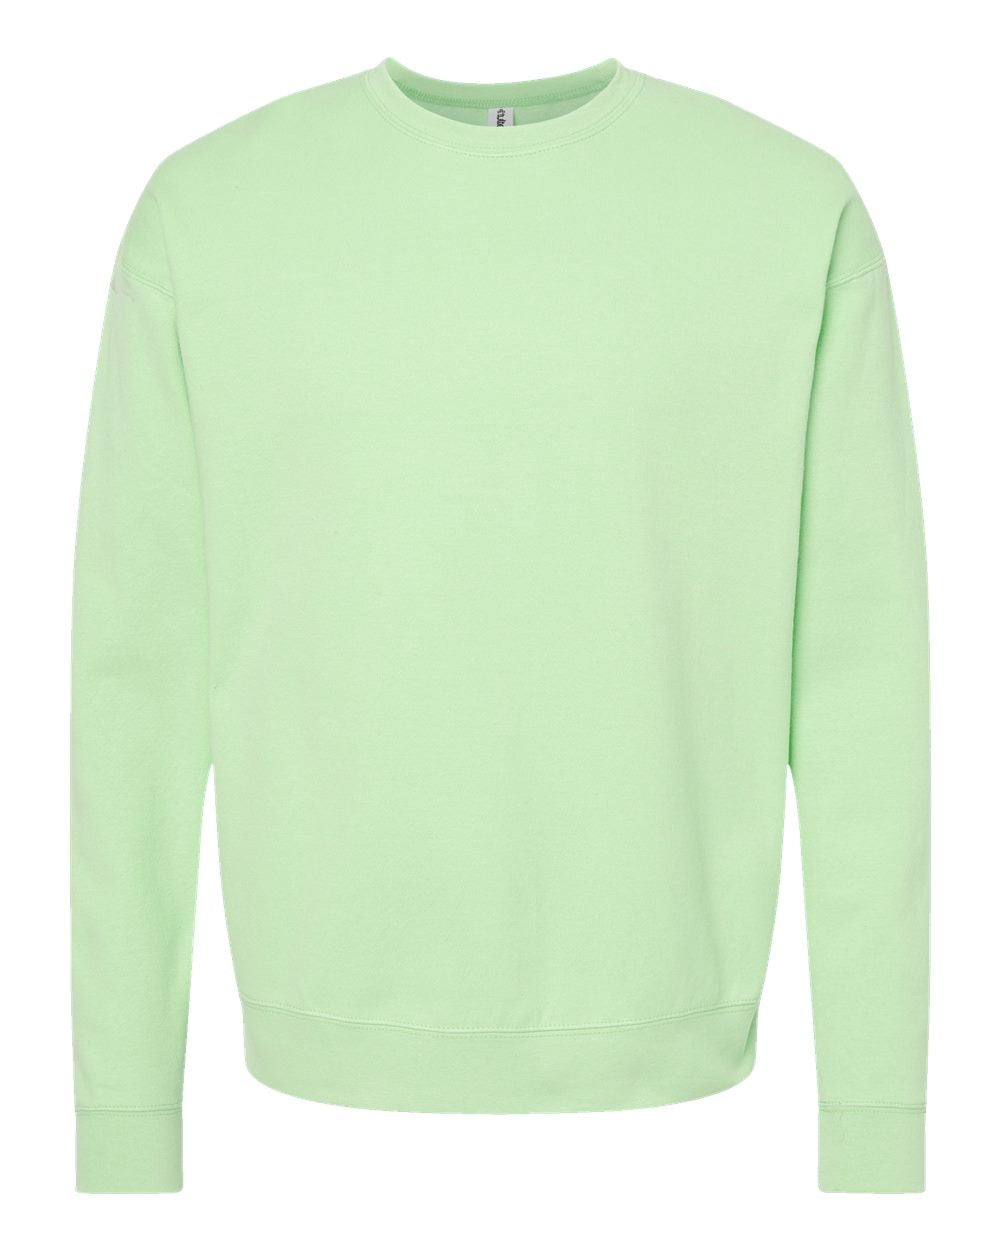 Tultex 340 Fleece Adult Sweatshirt - Neo Mint